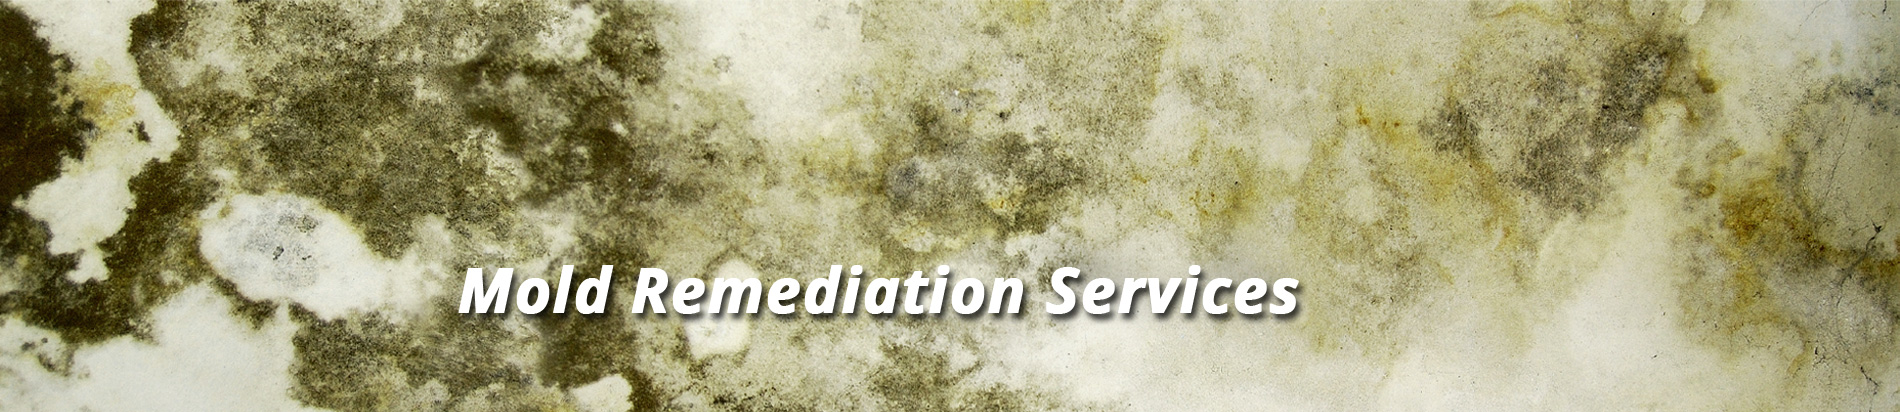 Mold-Remediation-banner